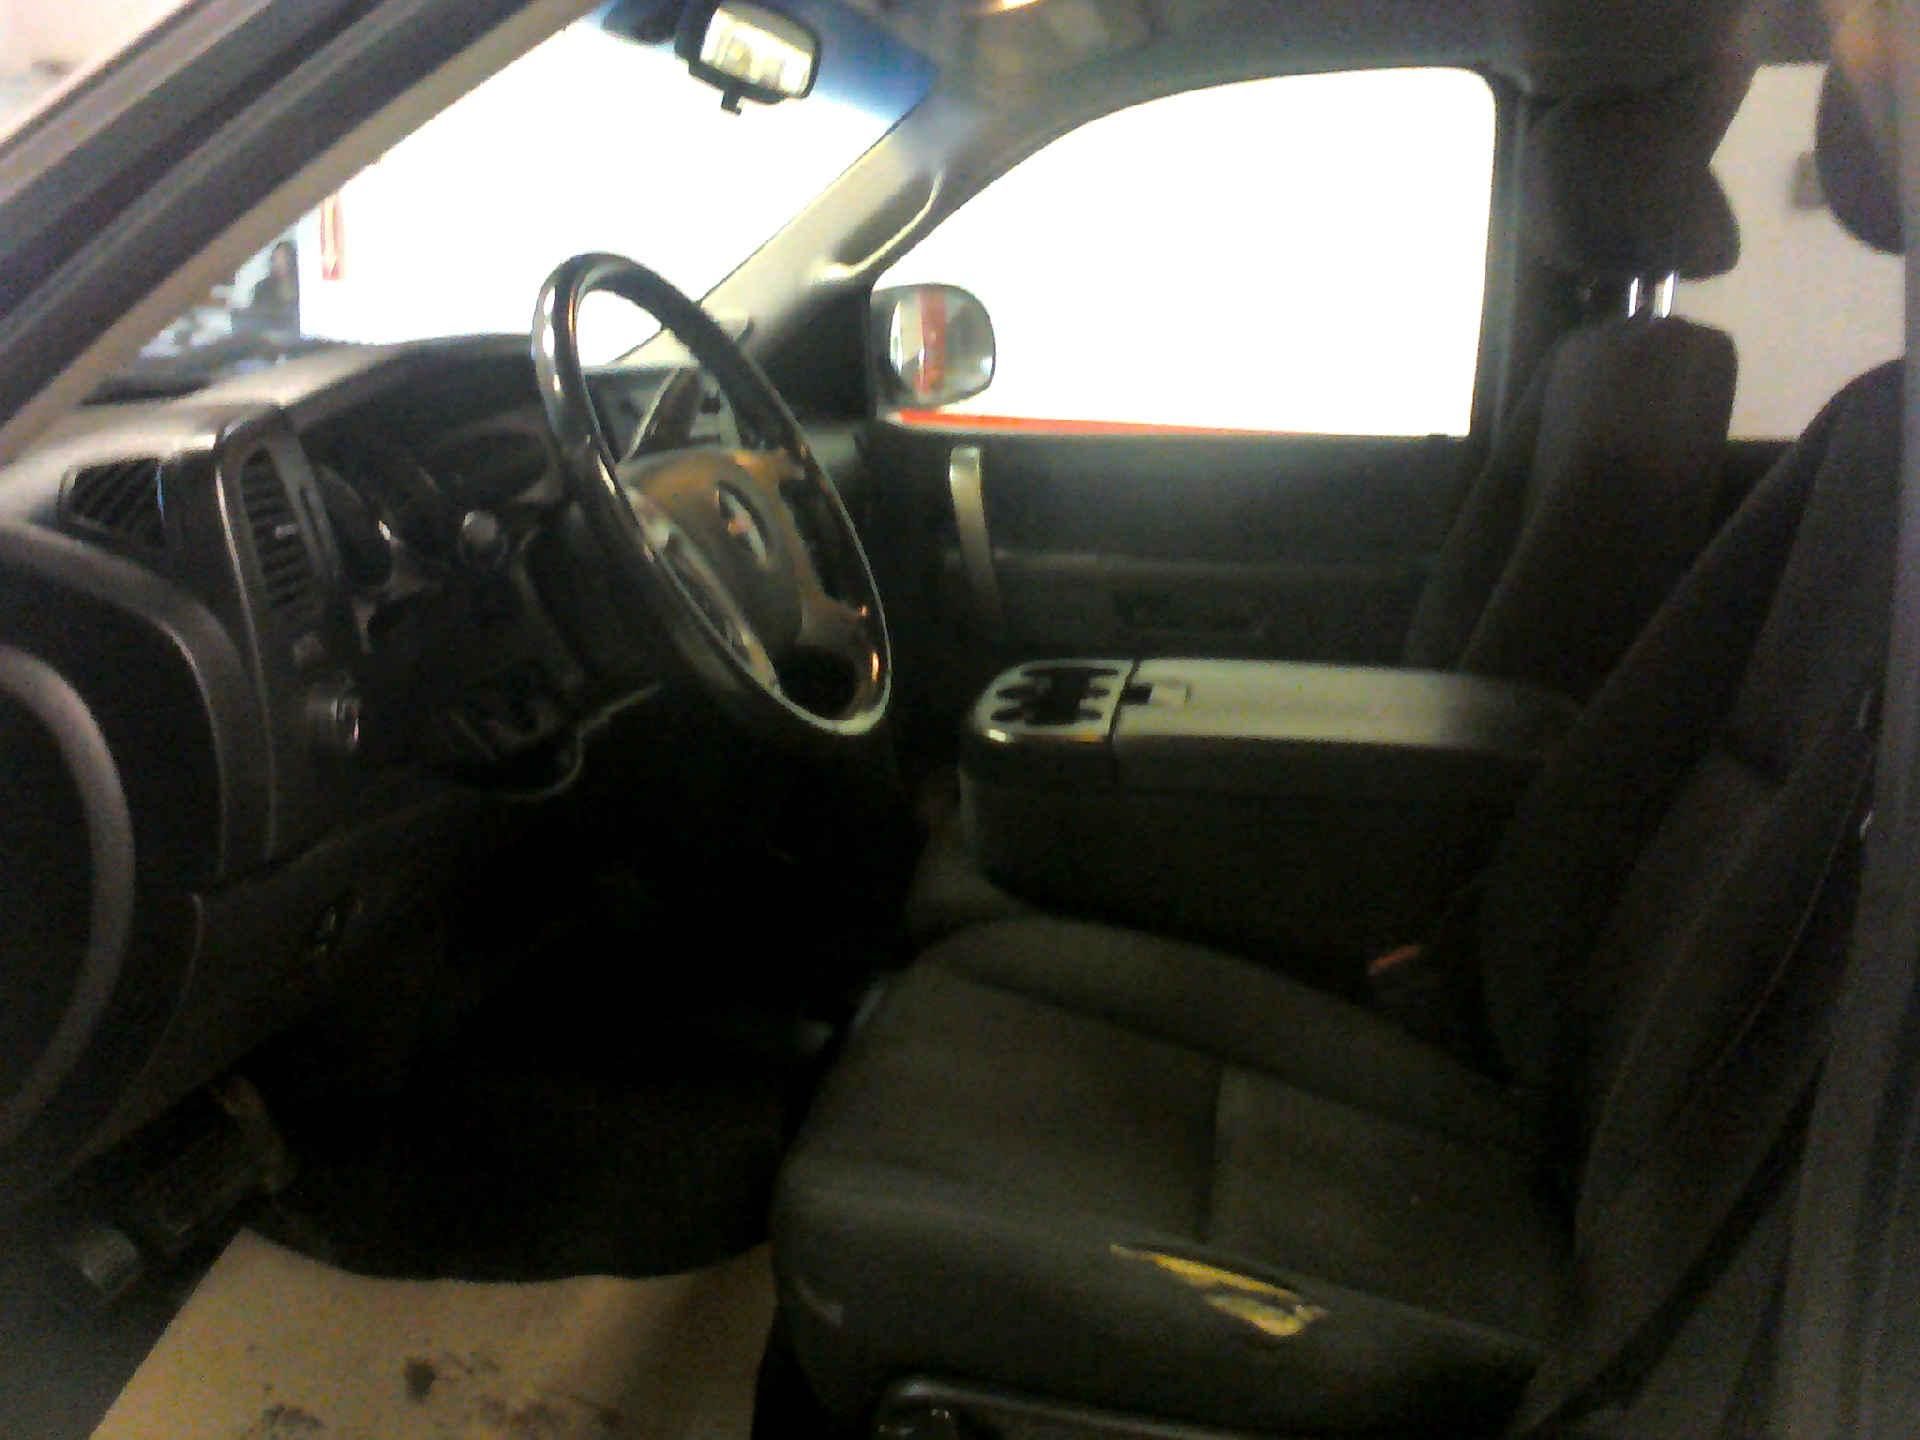 2012 GMC SIERRA 2500HD SLE QUAD CAB 4WD 6.0L V8 OHV 16V FFV AUTOMATIC SN:1GT220CG1CZ173635 OPTIONS: - Image 5 of 9